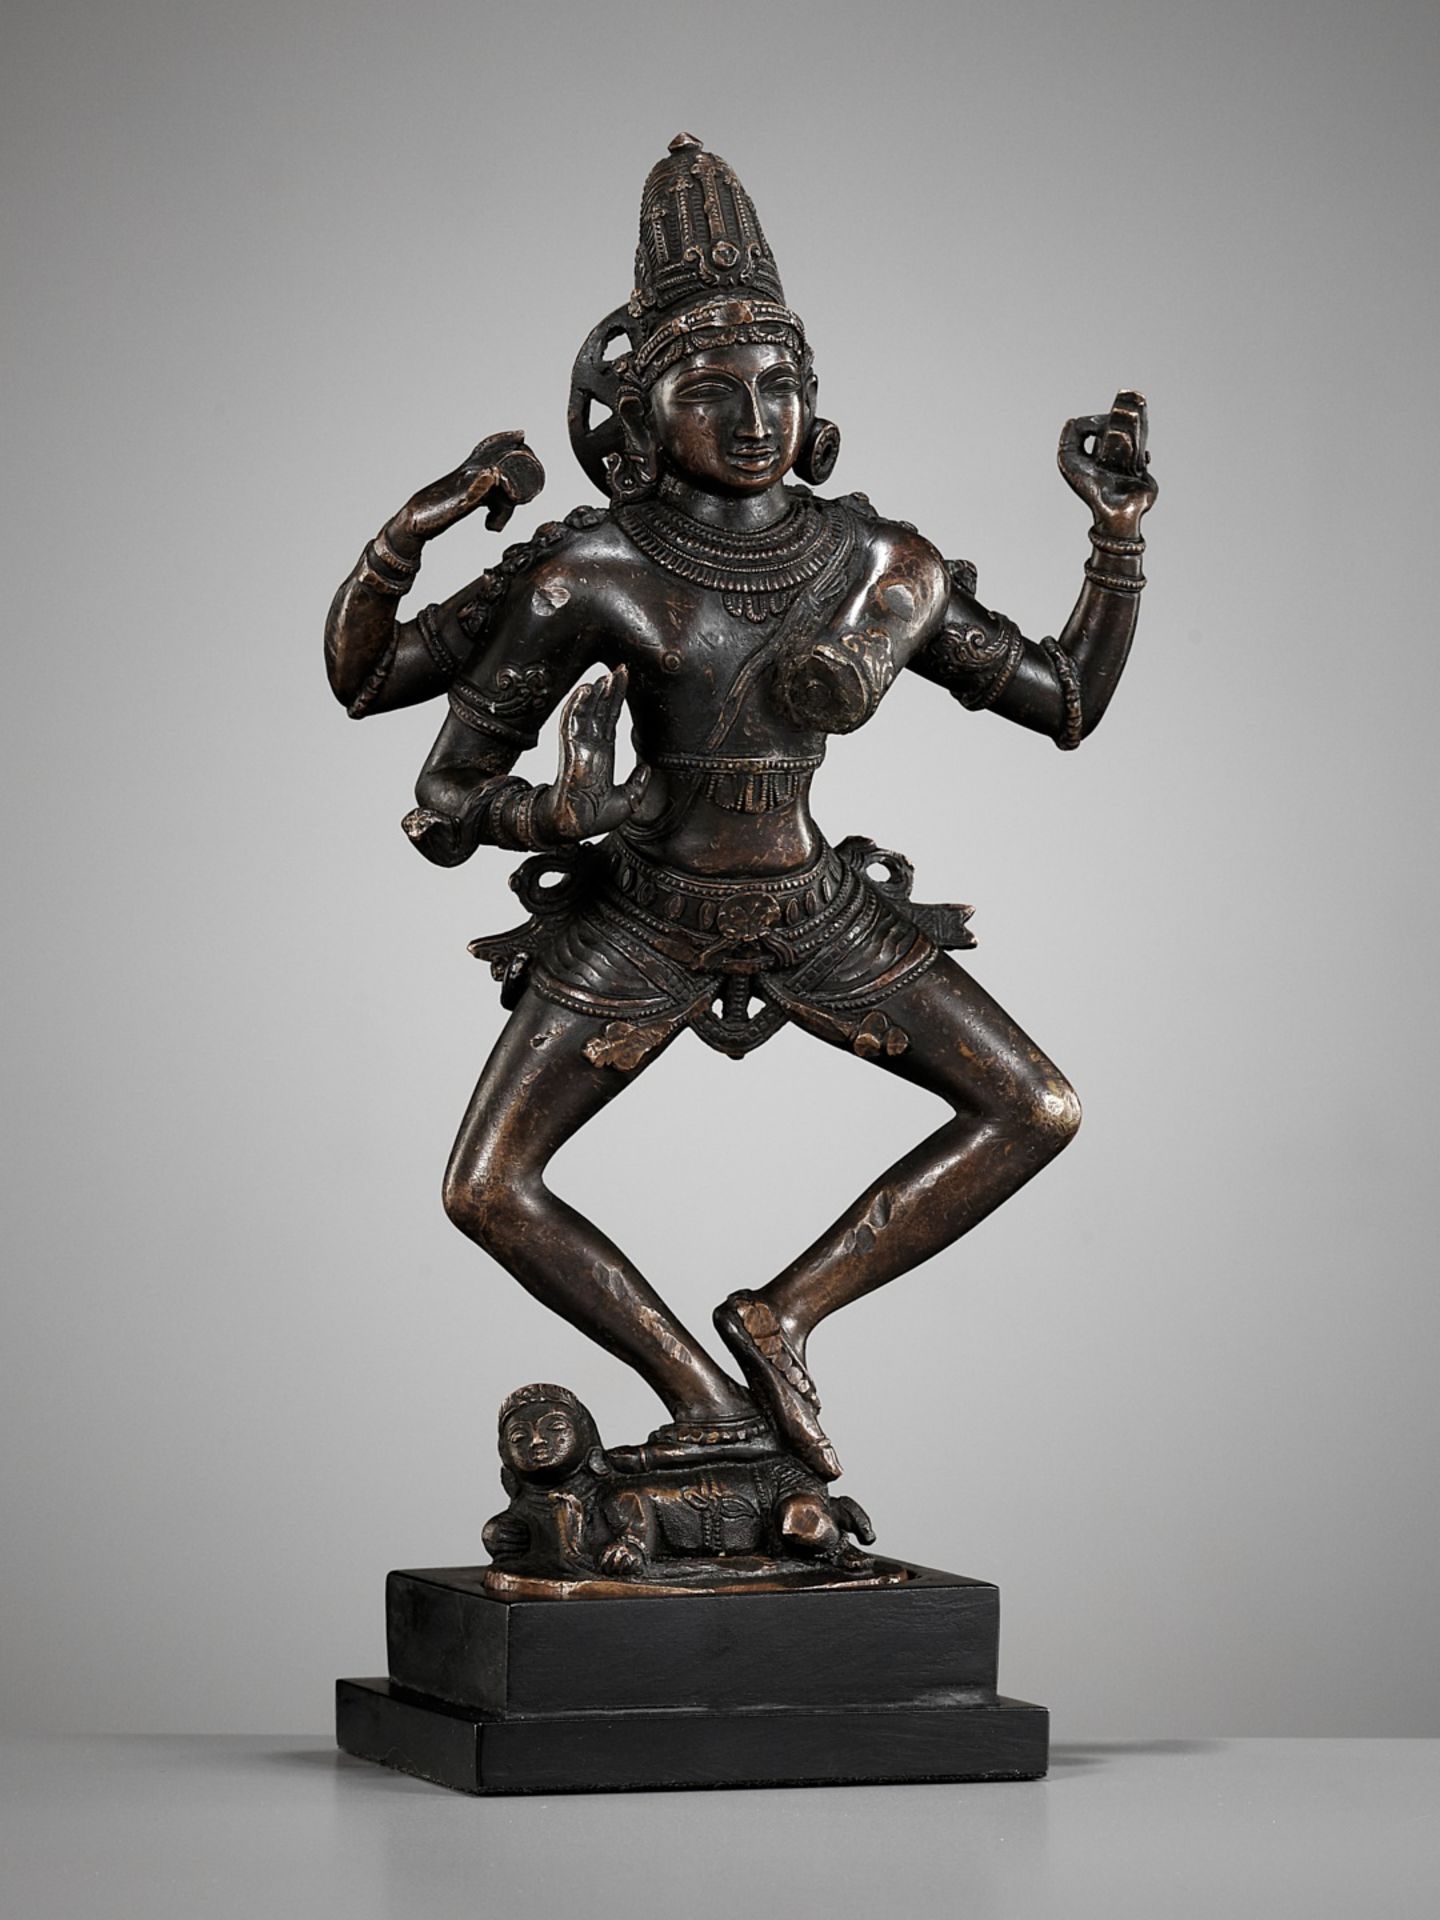 A BRONZE FIGURE OF SHIVA NATARAJA, VIJAYANAGARA EMPIRE, SOUTH INDIA, 1336-1646